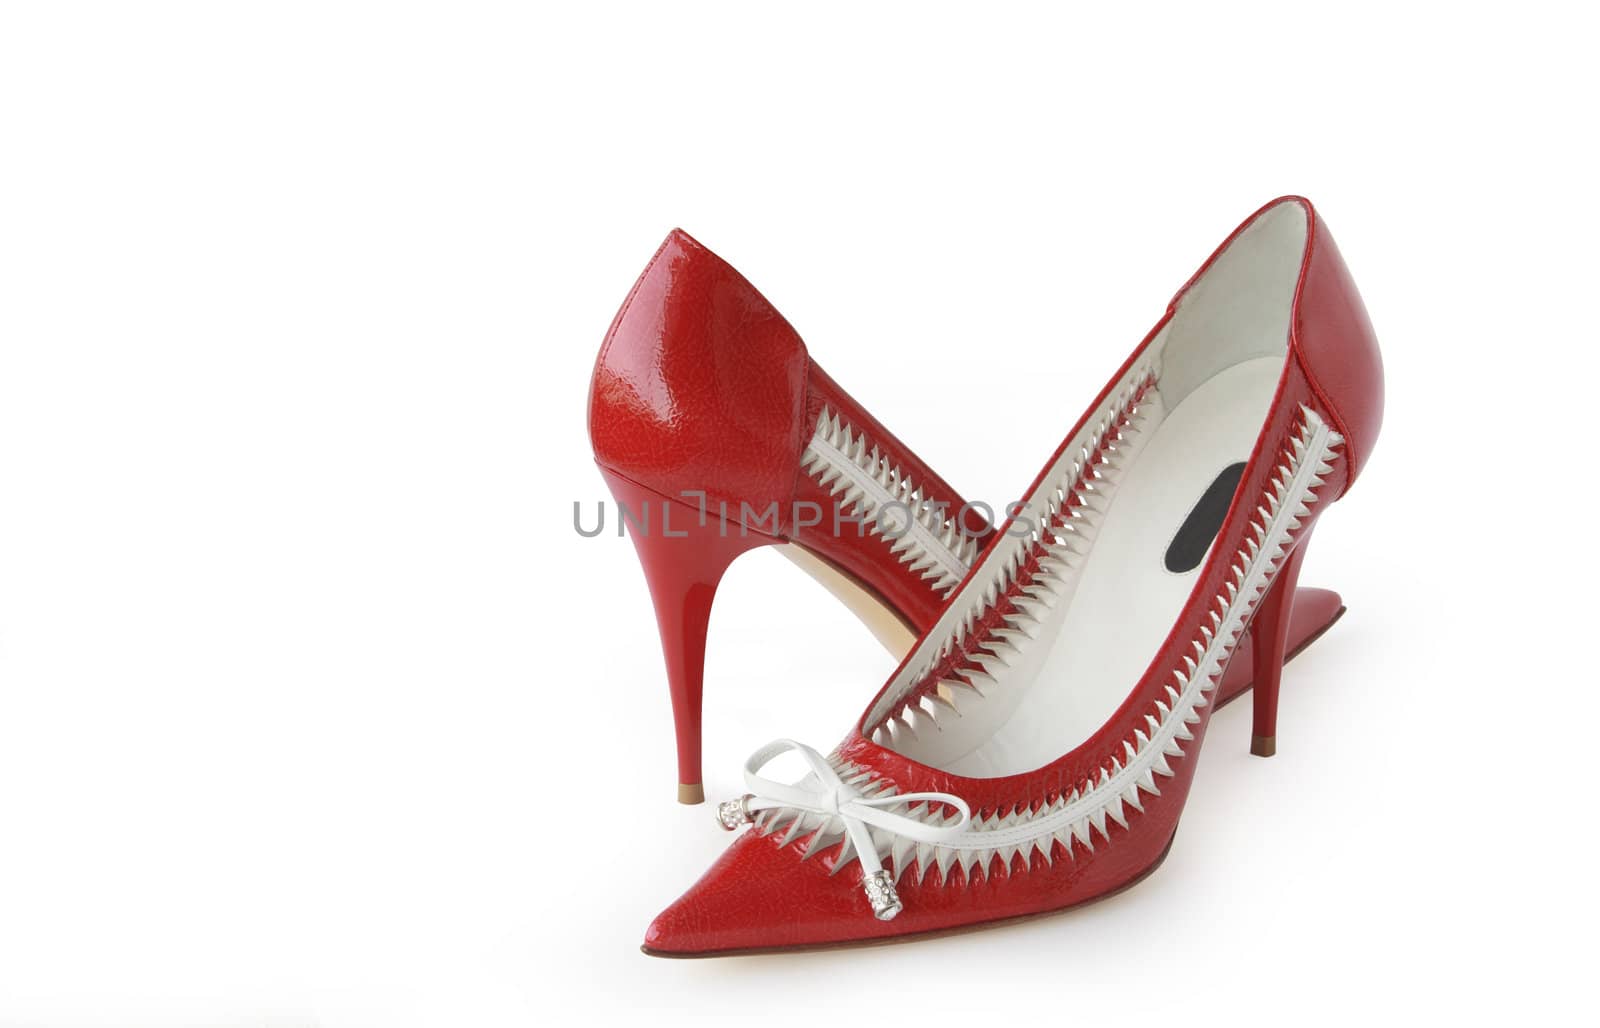 Red Woman Shoes by kvkirillov